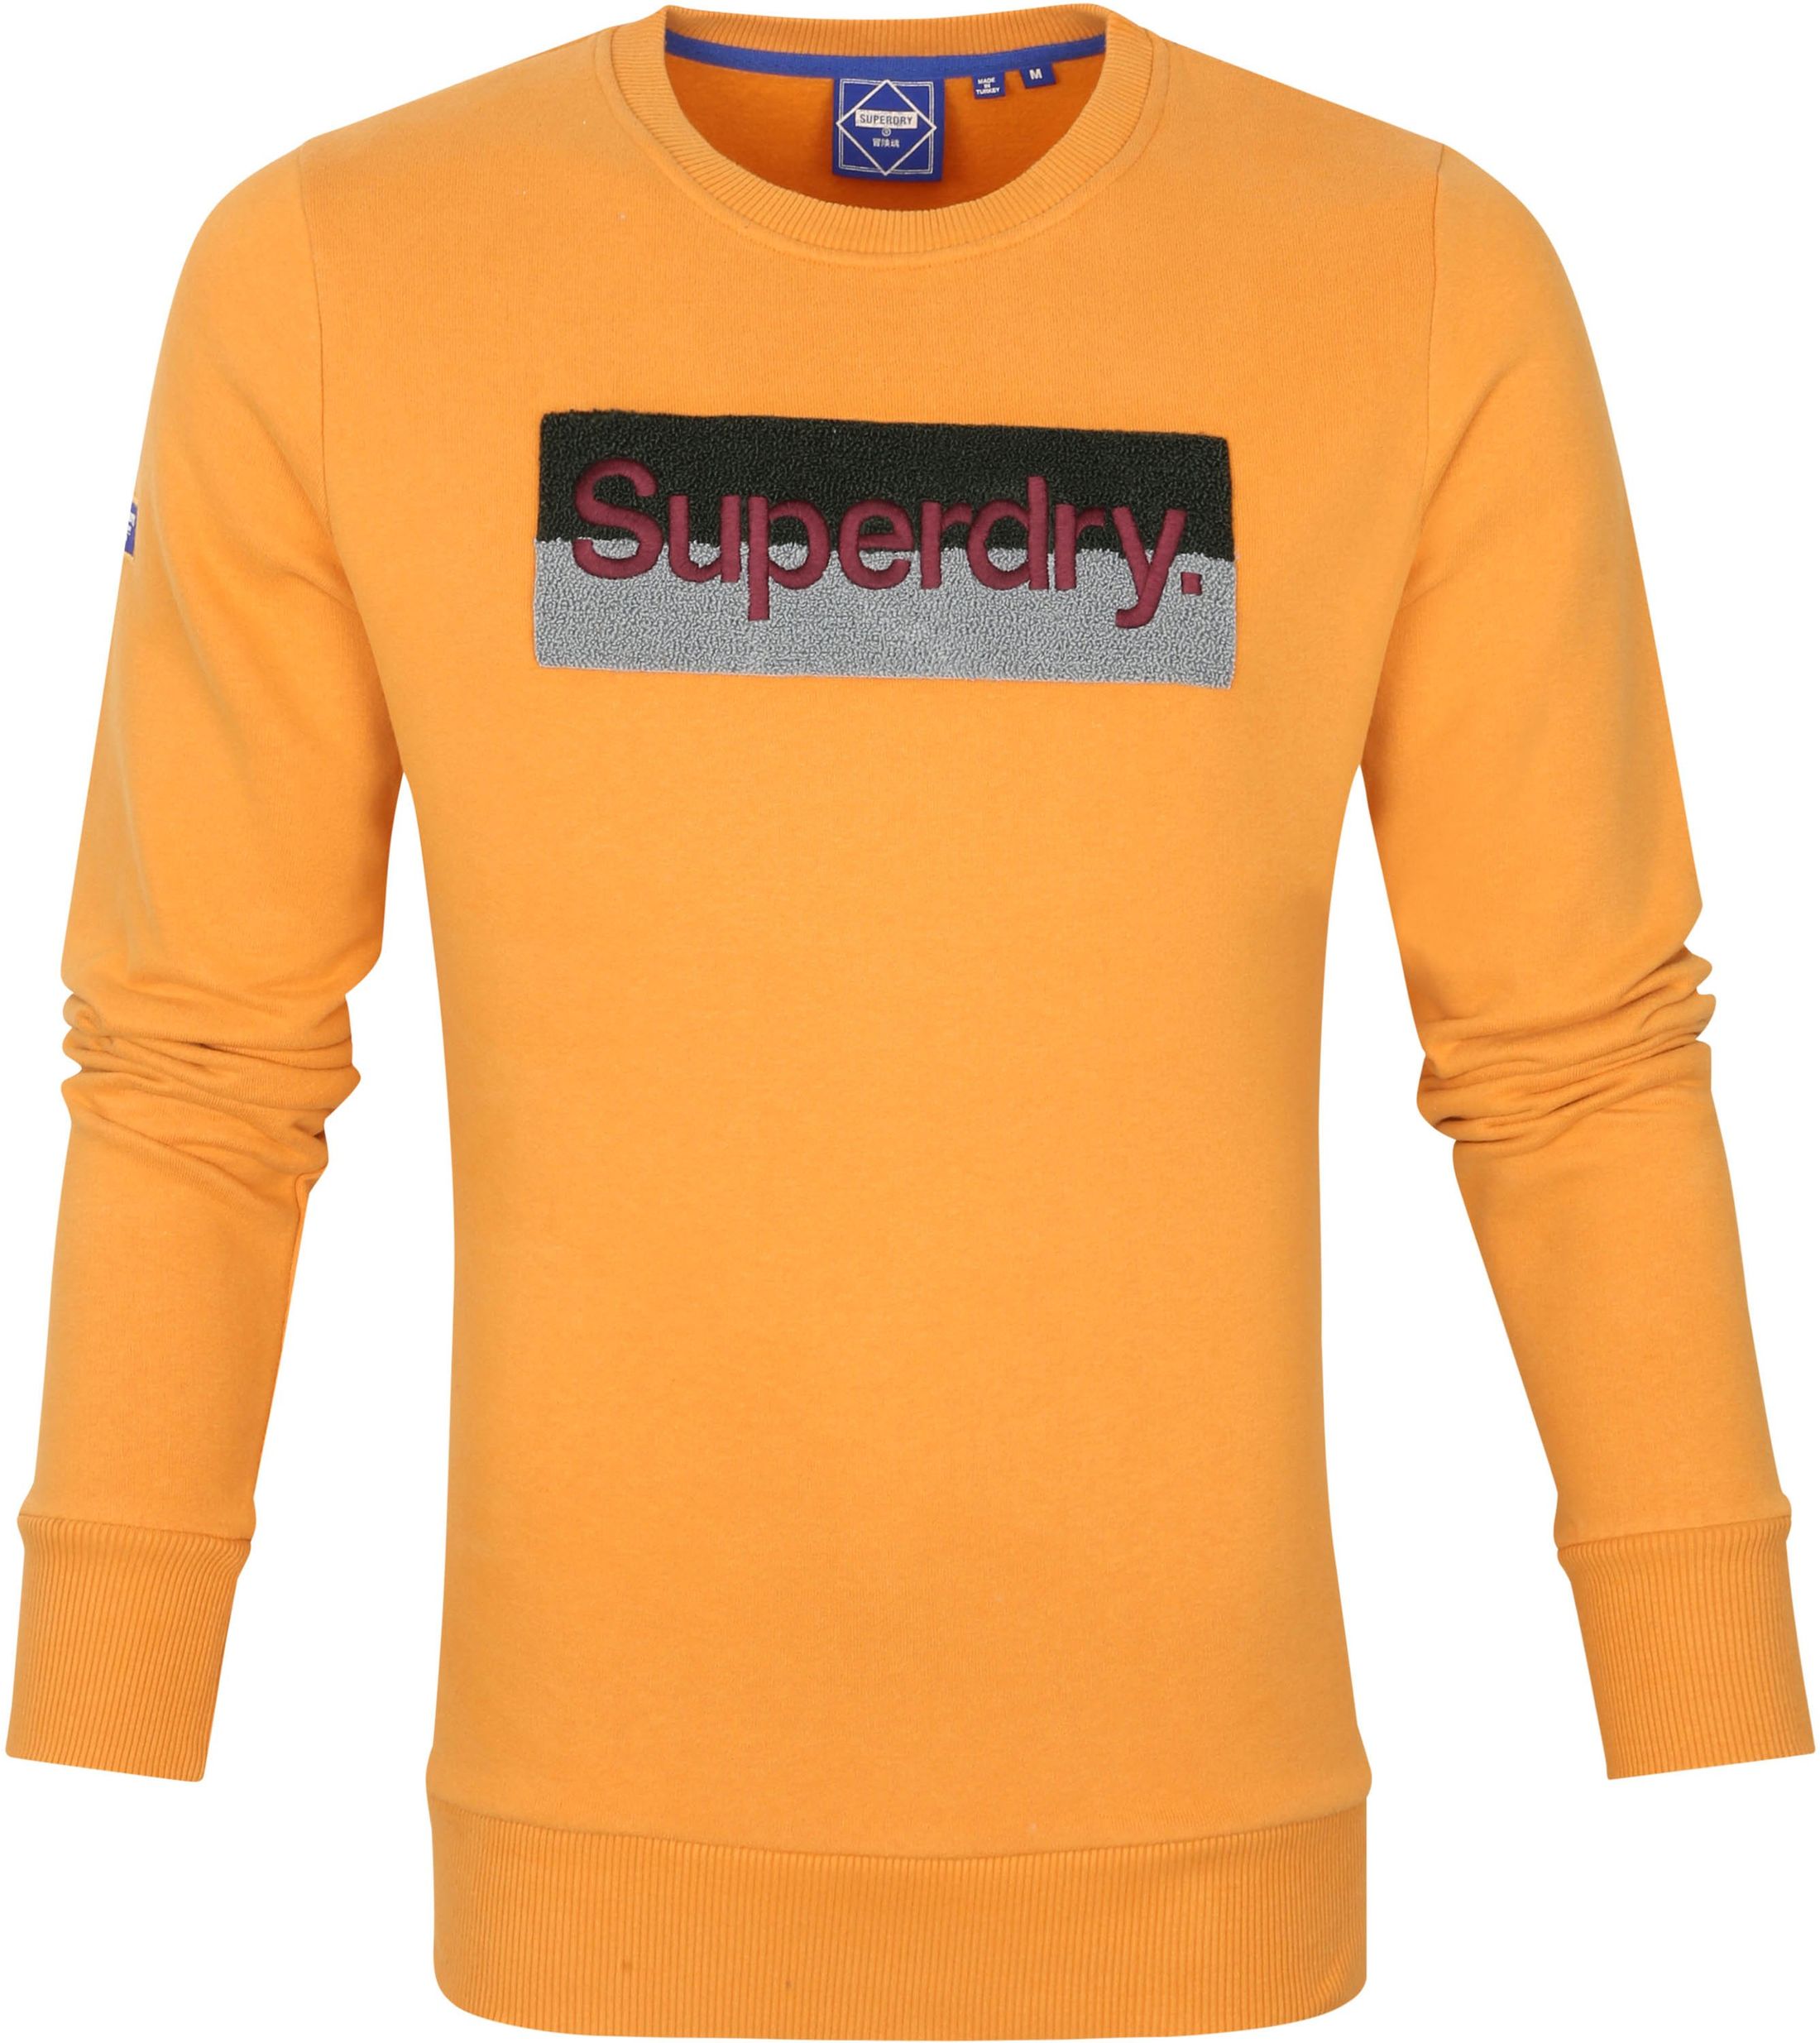 Superdry Sweater Workwear Orange size M